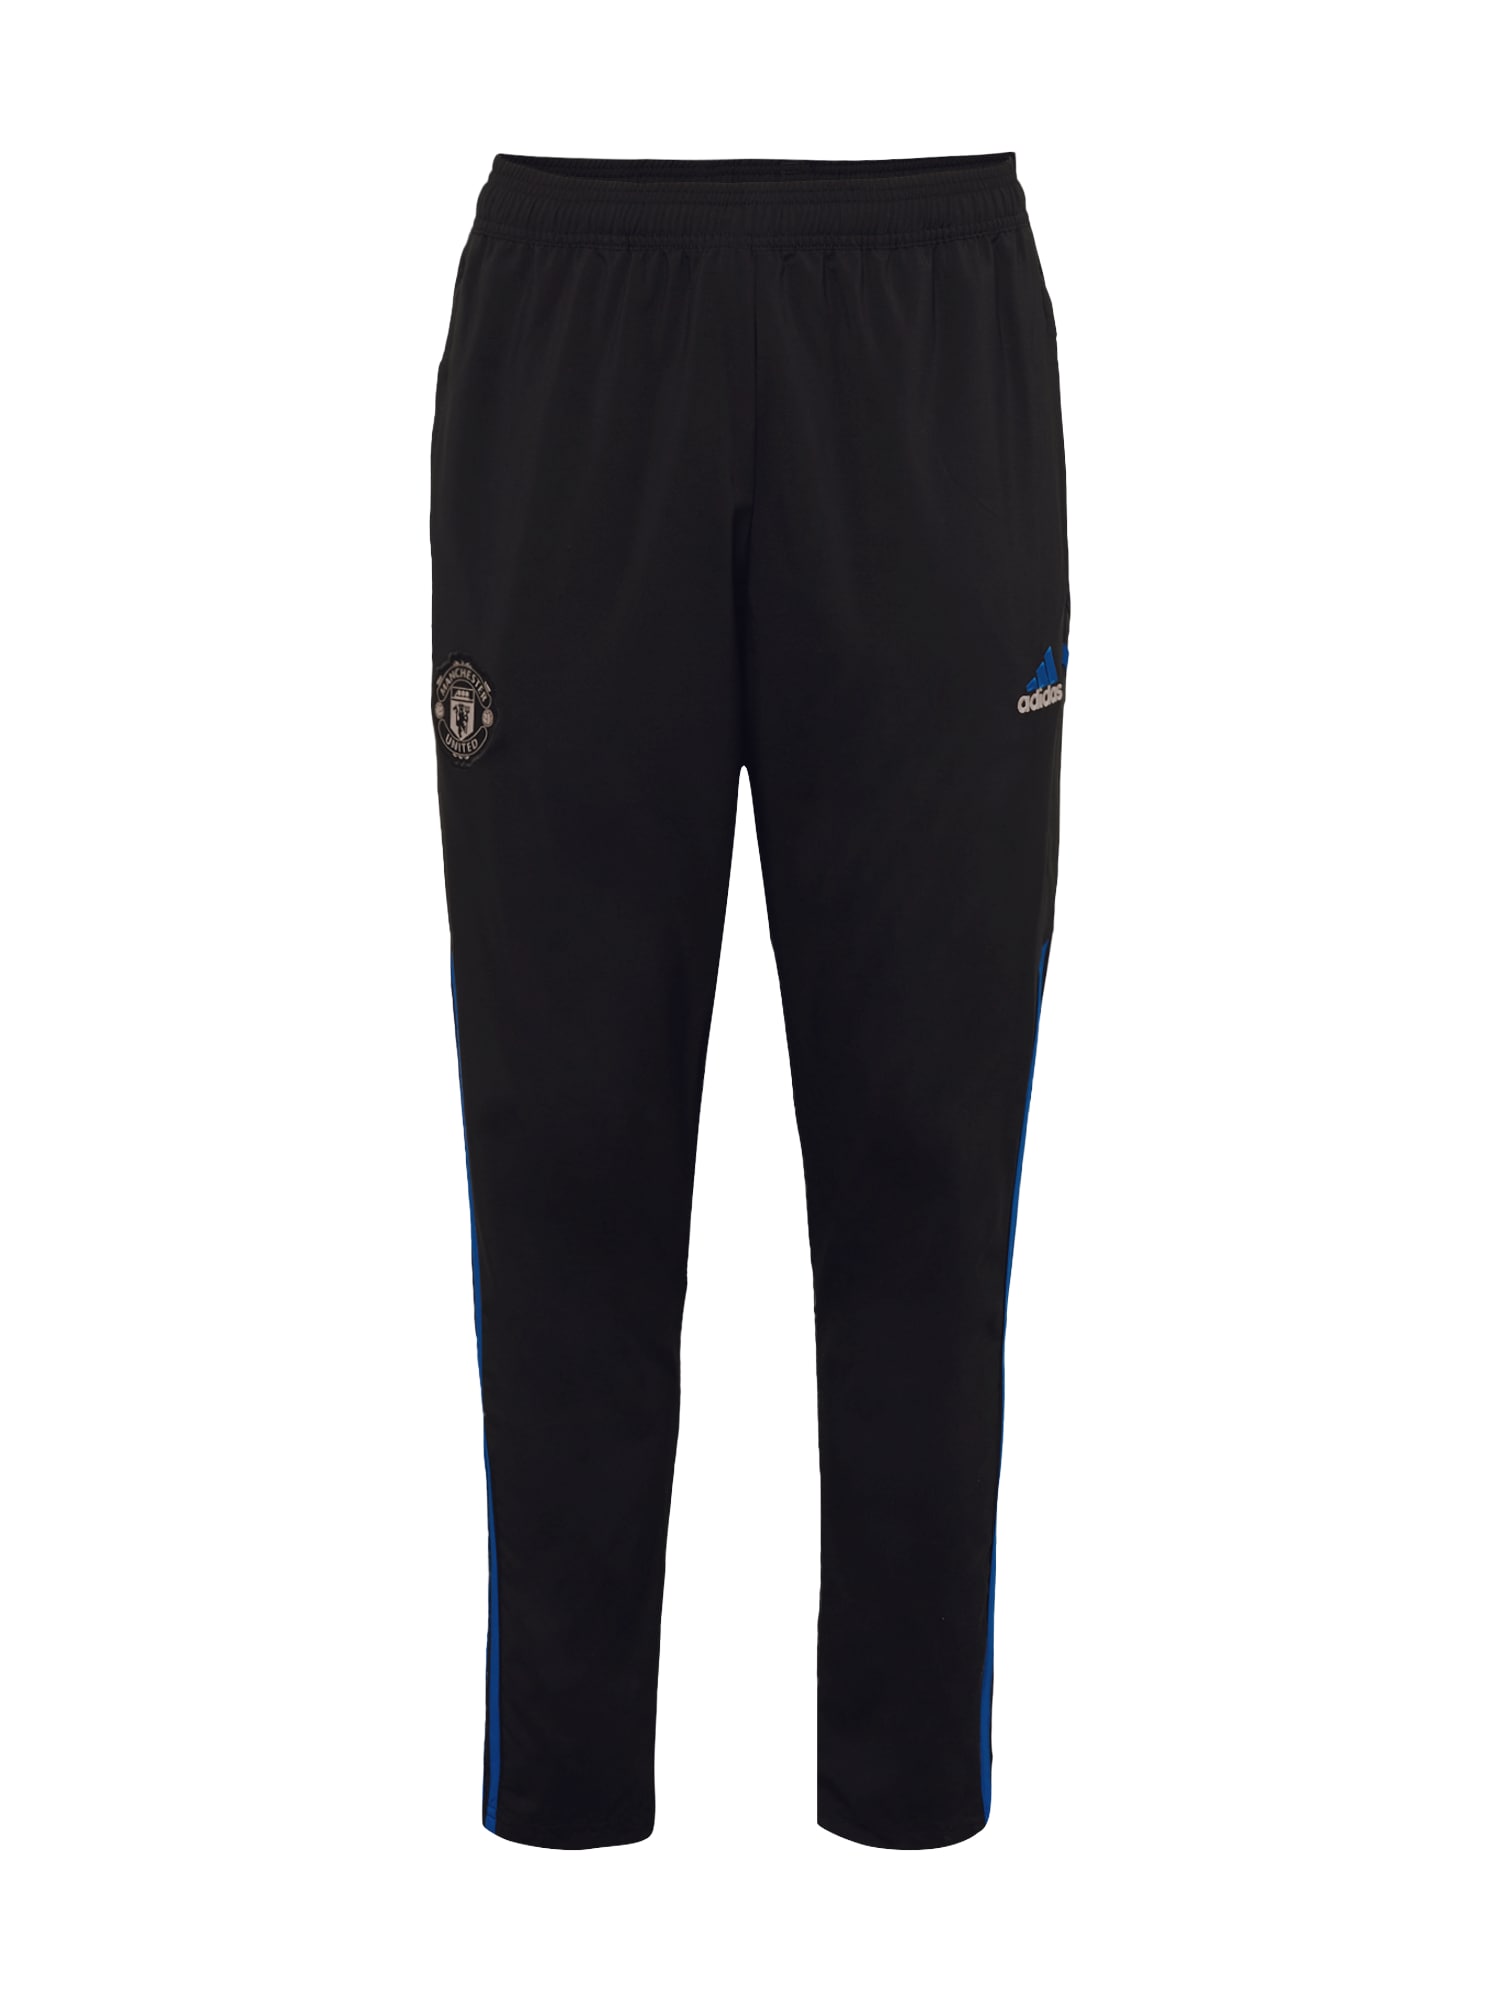 ADIDAS PERFORMANCE Športne hlače 'Manchester United'  kobalt modra / zlato-rumena / črna